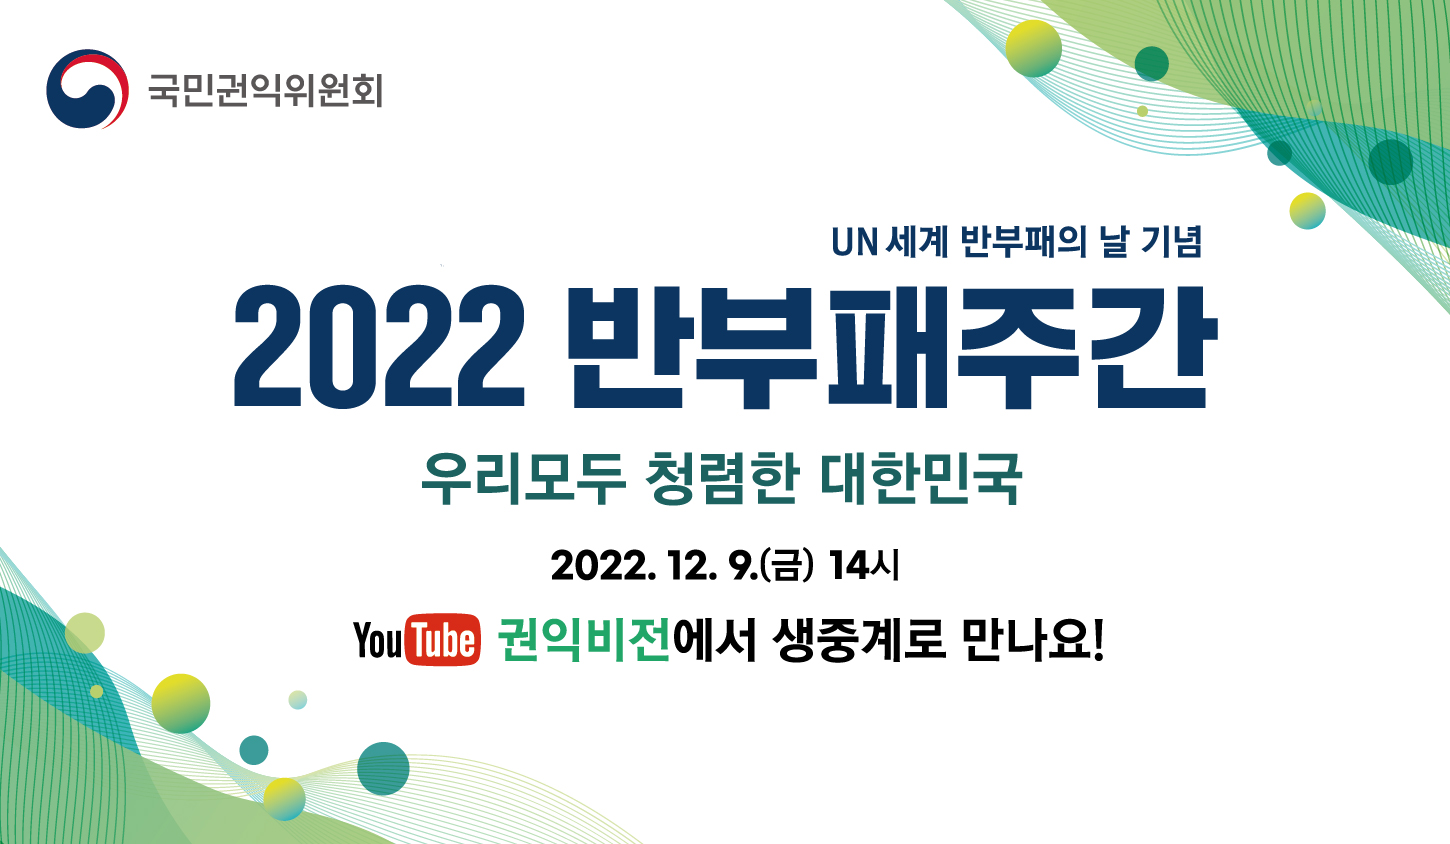 UN 세계 반부패의 날 기념 2022 반부패주간 우리모두 청렴한 대한민국 2022.12.9(금) 14시 YouTube 권익비전에서 생중계로 만나요!